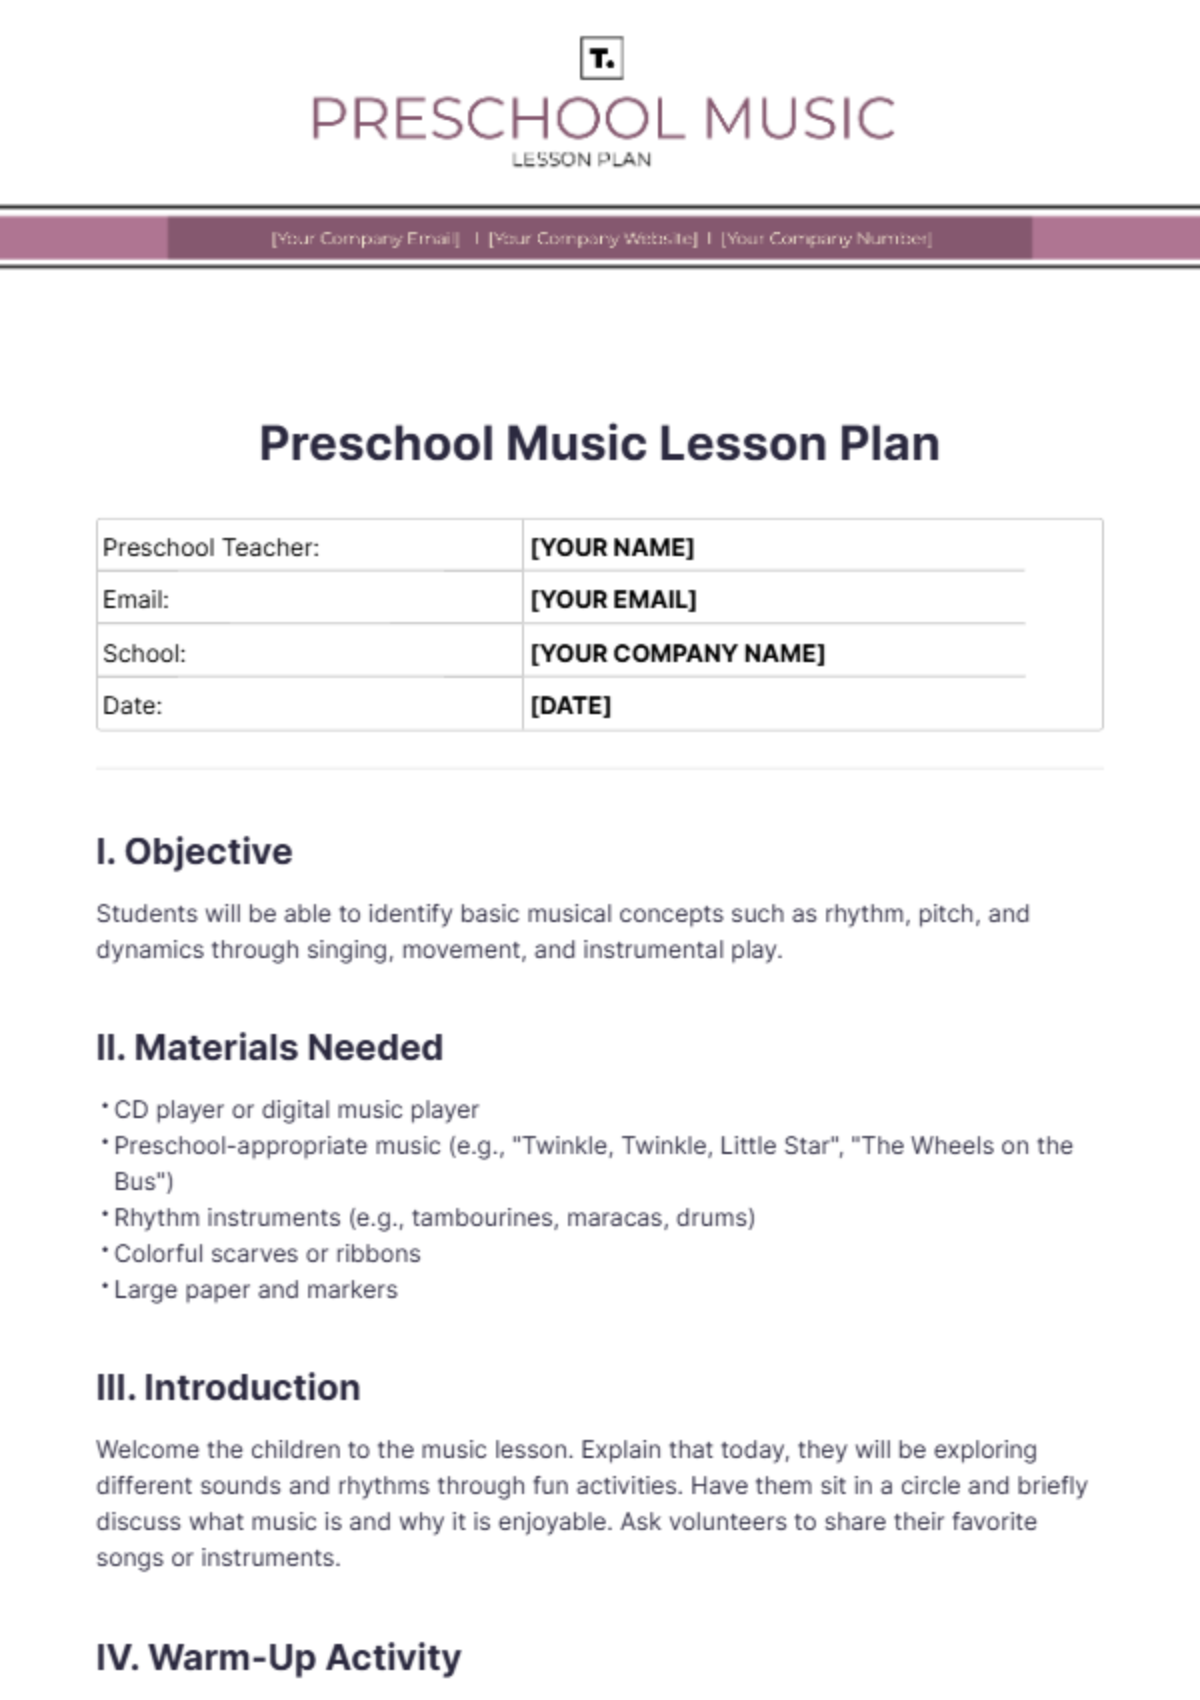 Free Preschool Music Lesson Plan Template